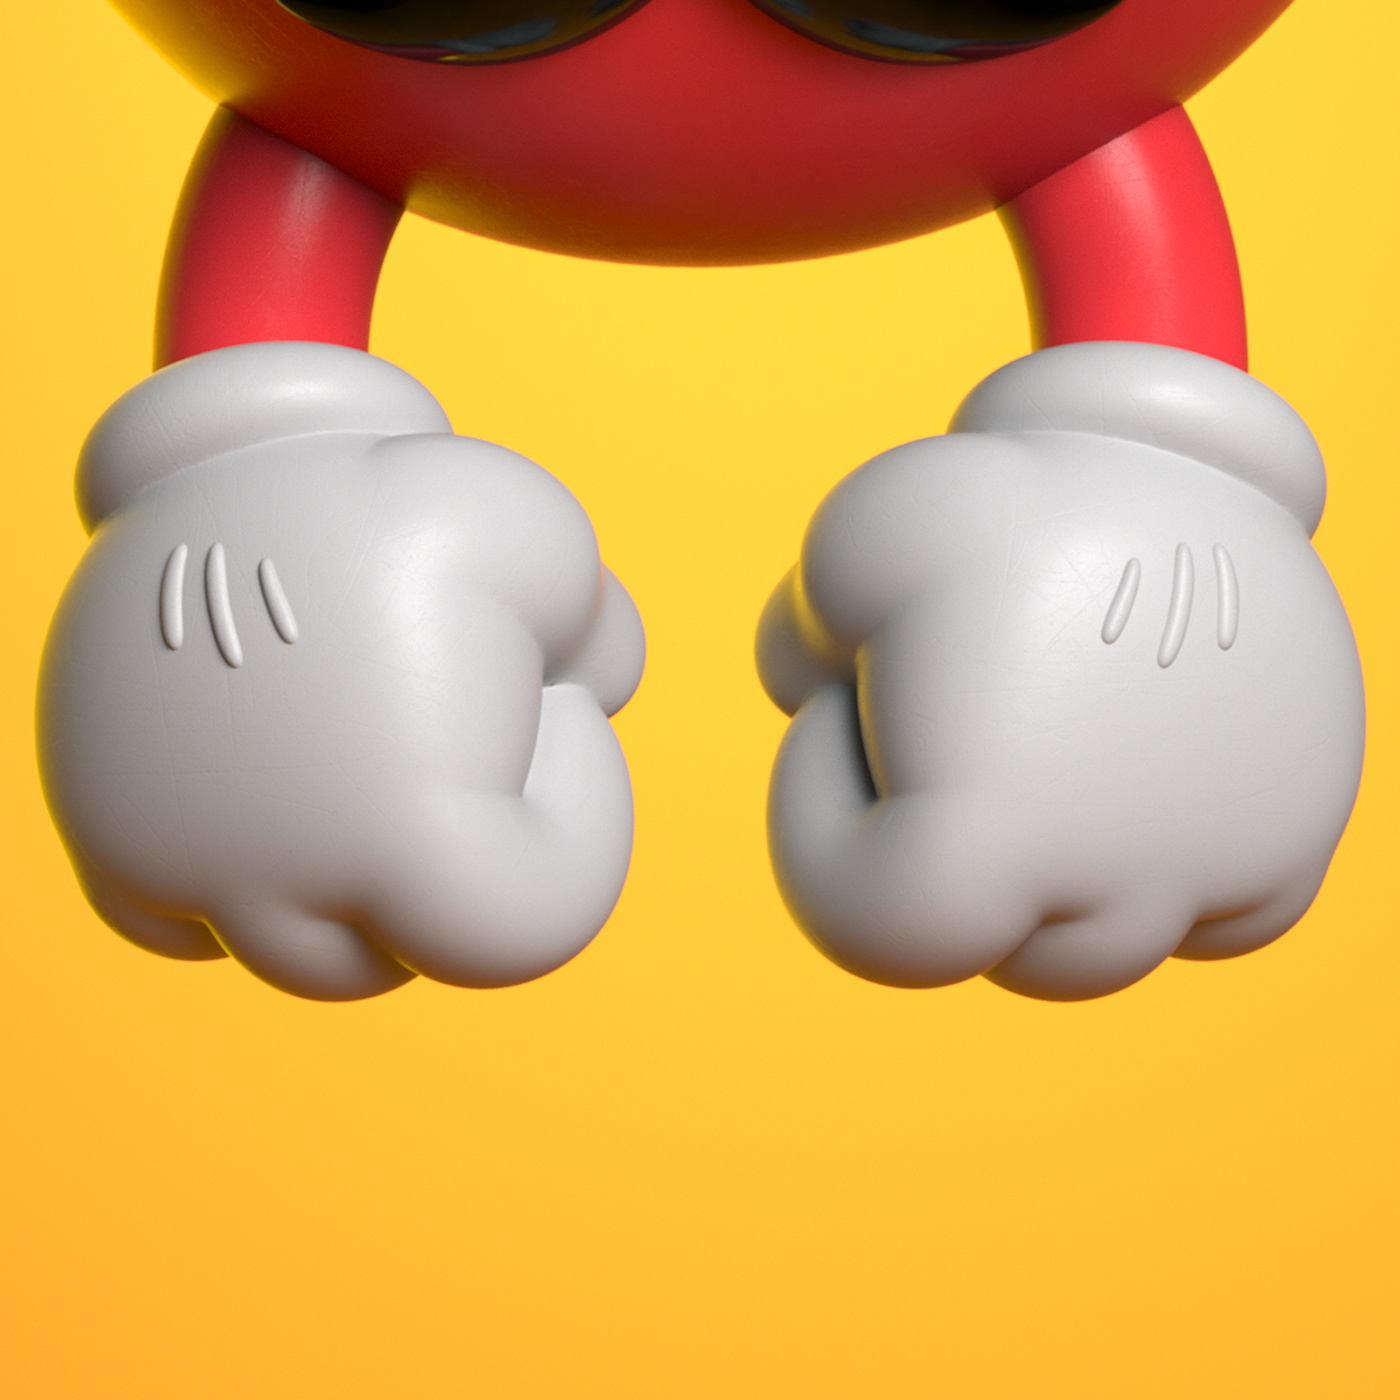 shinbone Scott Wetterschneider 3D Character design digital bomb kyle red Render creative jthree j3concepts jared nickerson Mascot